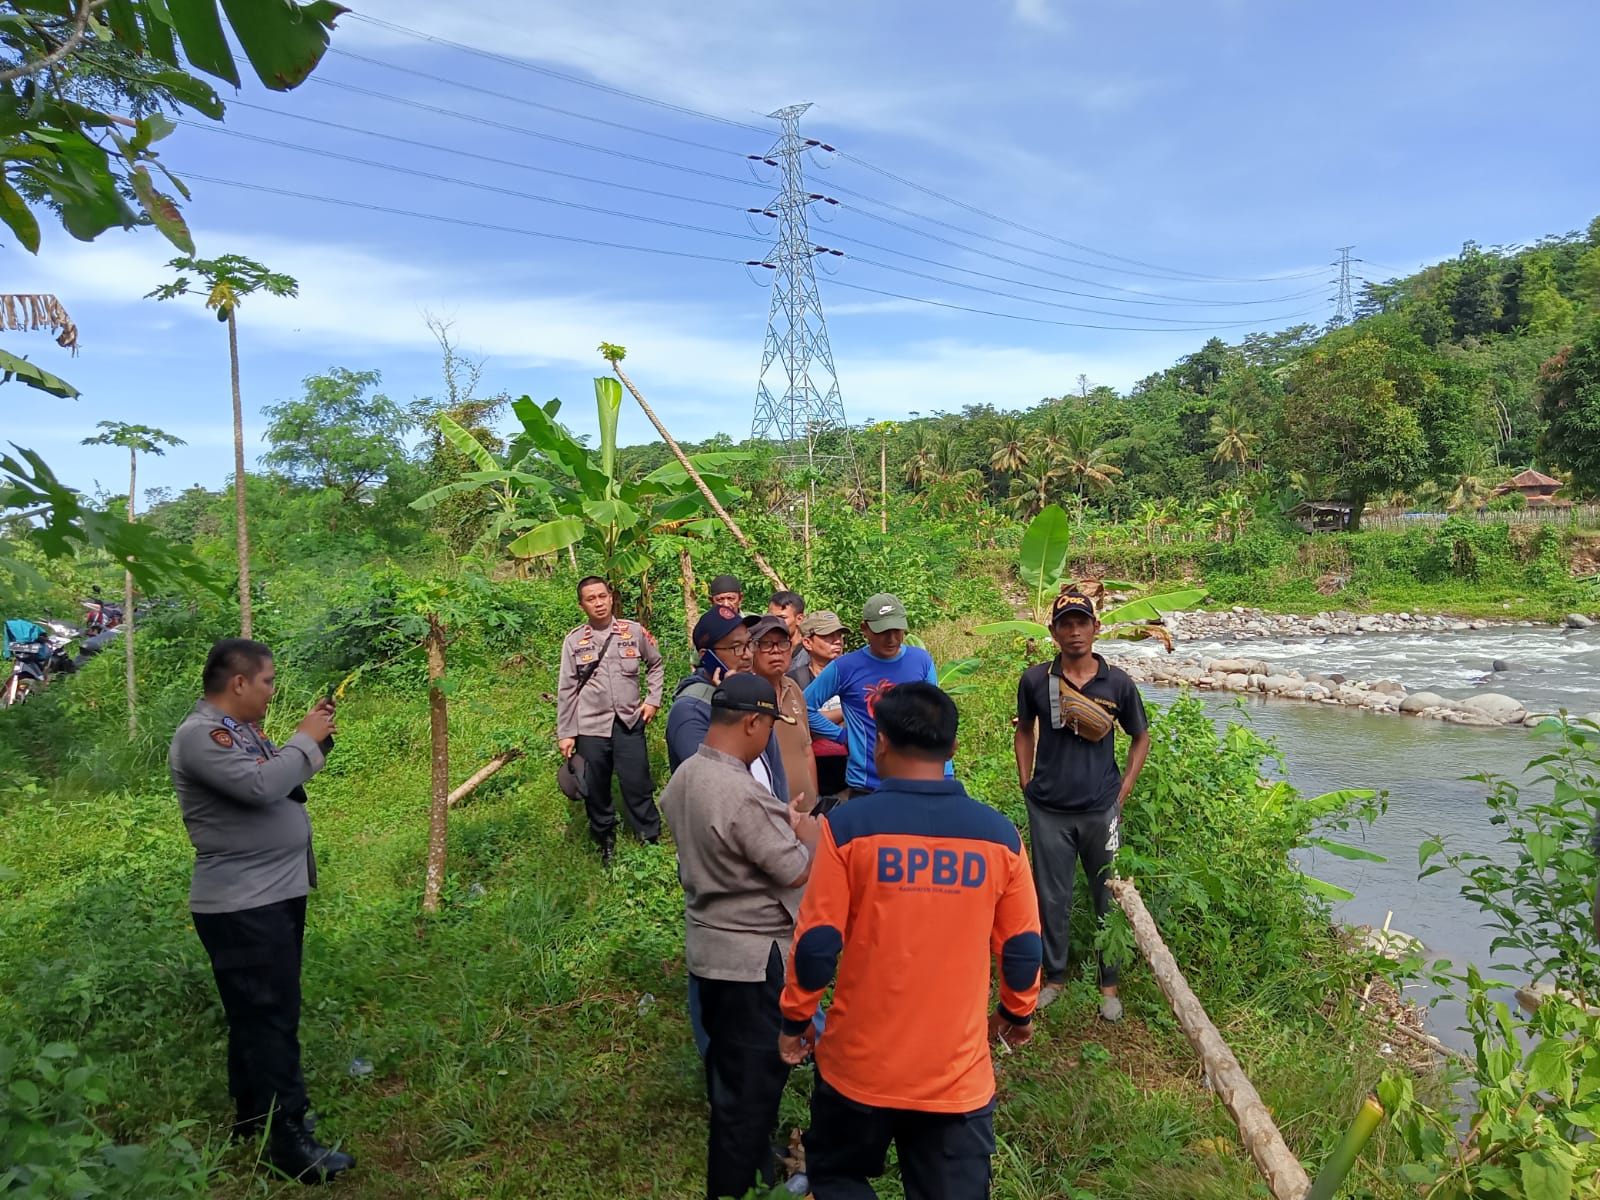 Tim SAR Gabungan saat melakukan penyisiran mencari Mardi warga Gombong Panjang yang hilang terbawa arus sungai Cimaja, kecamatan Cikakak, Kabupaten Sukabumi.